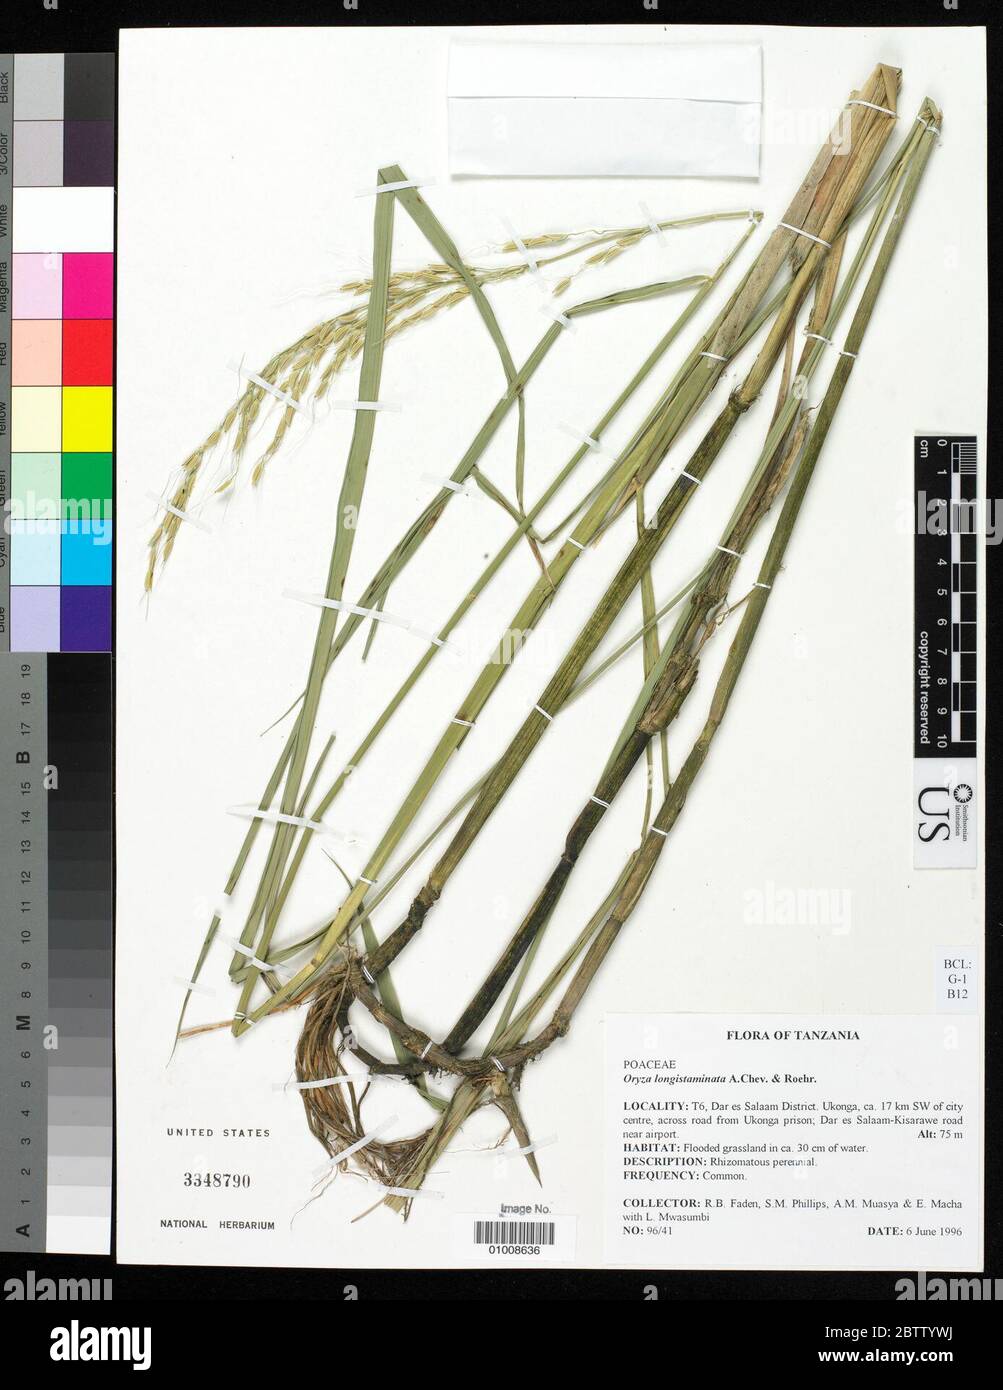 Oryza longistaminata A Chev Roehr. Stock Photo